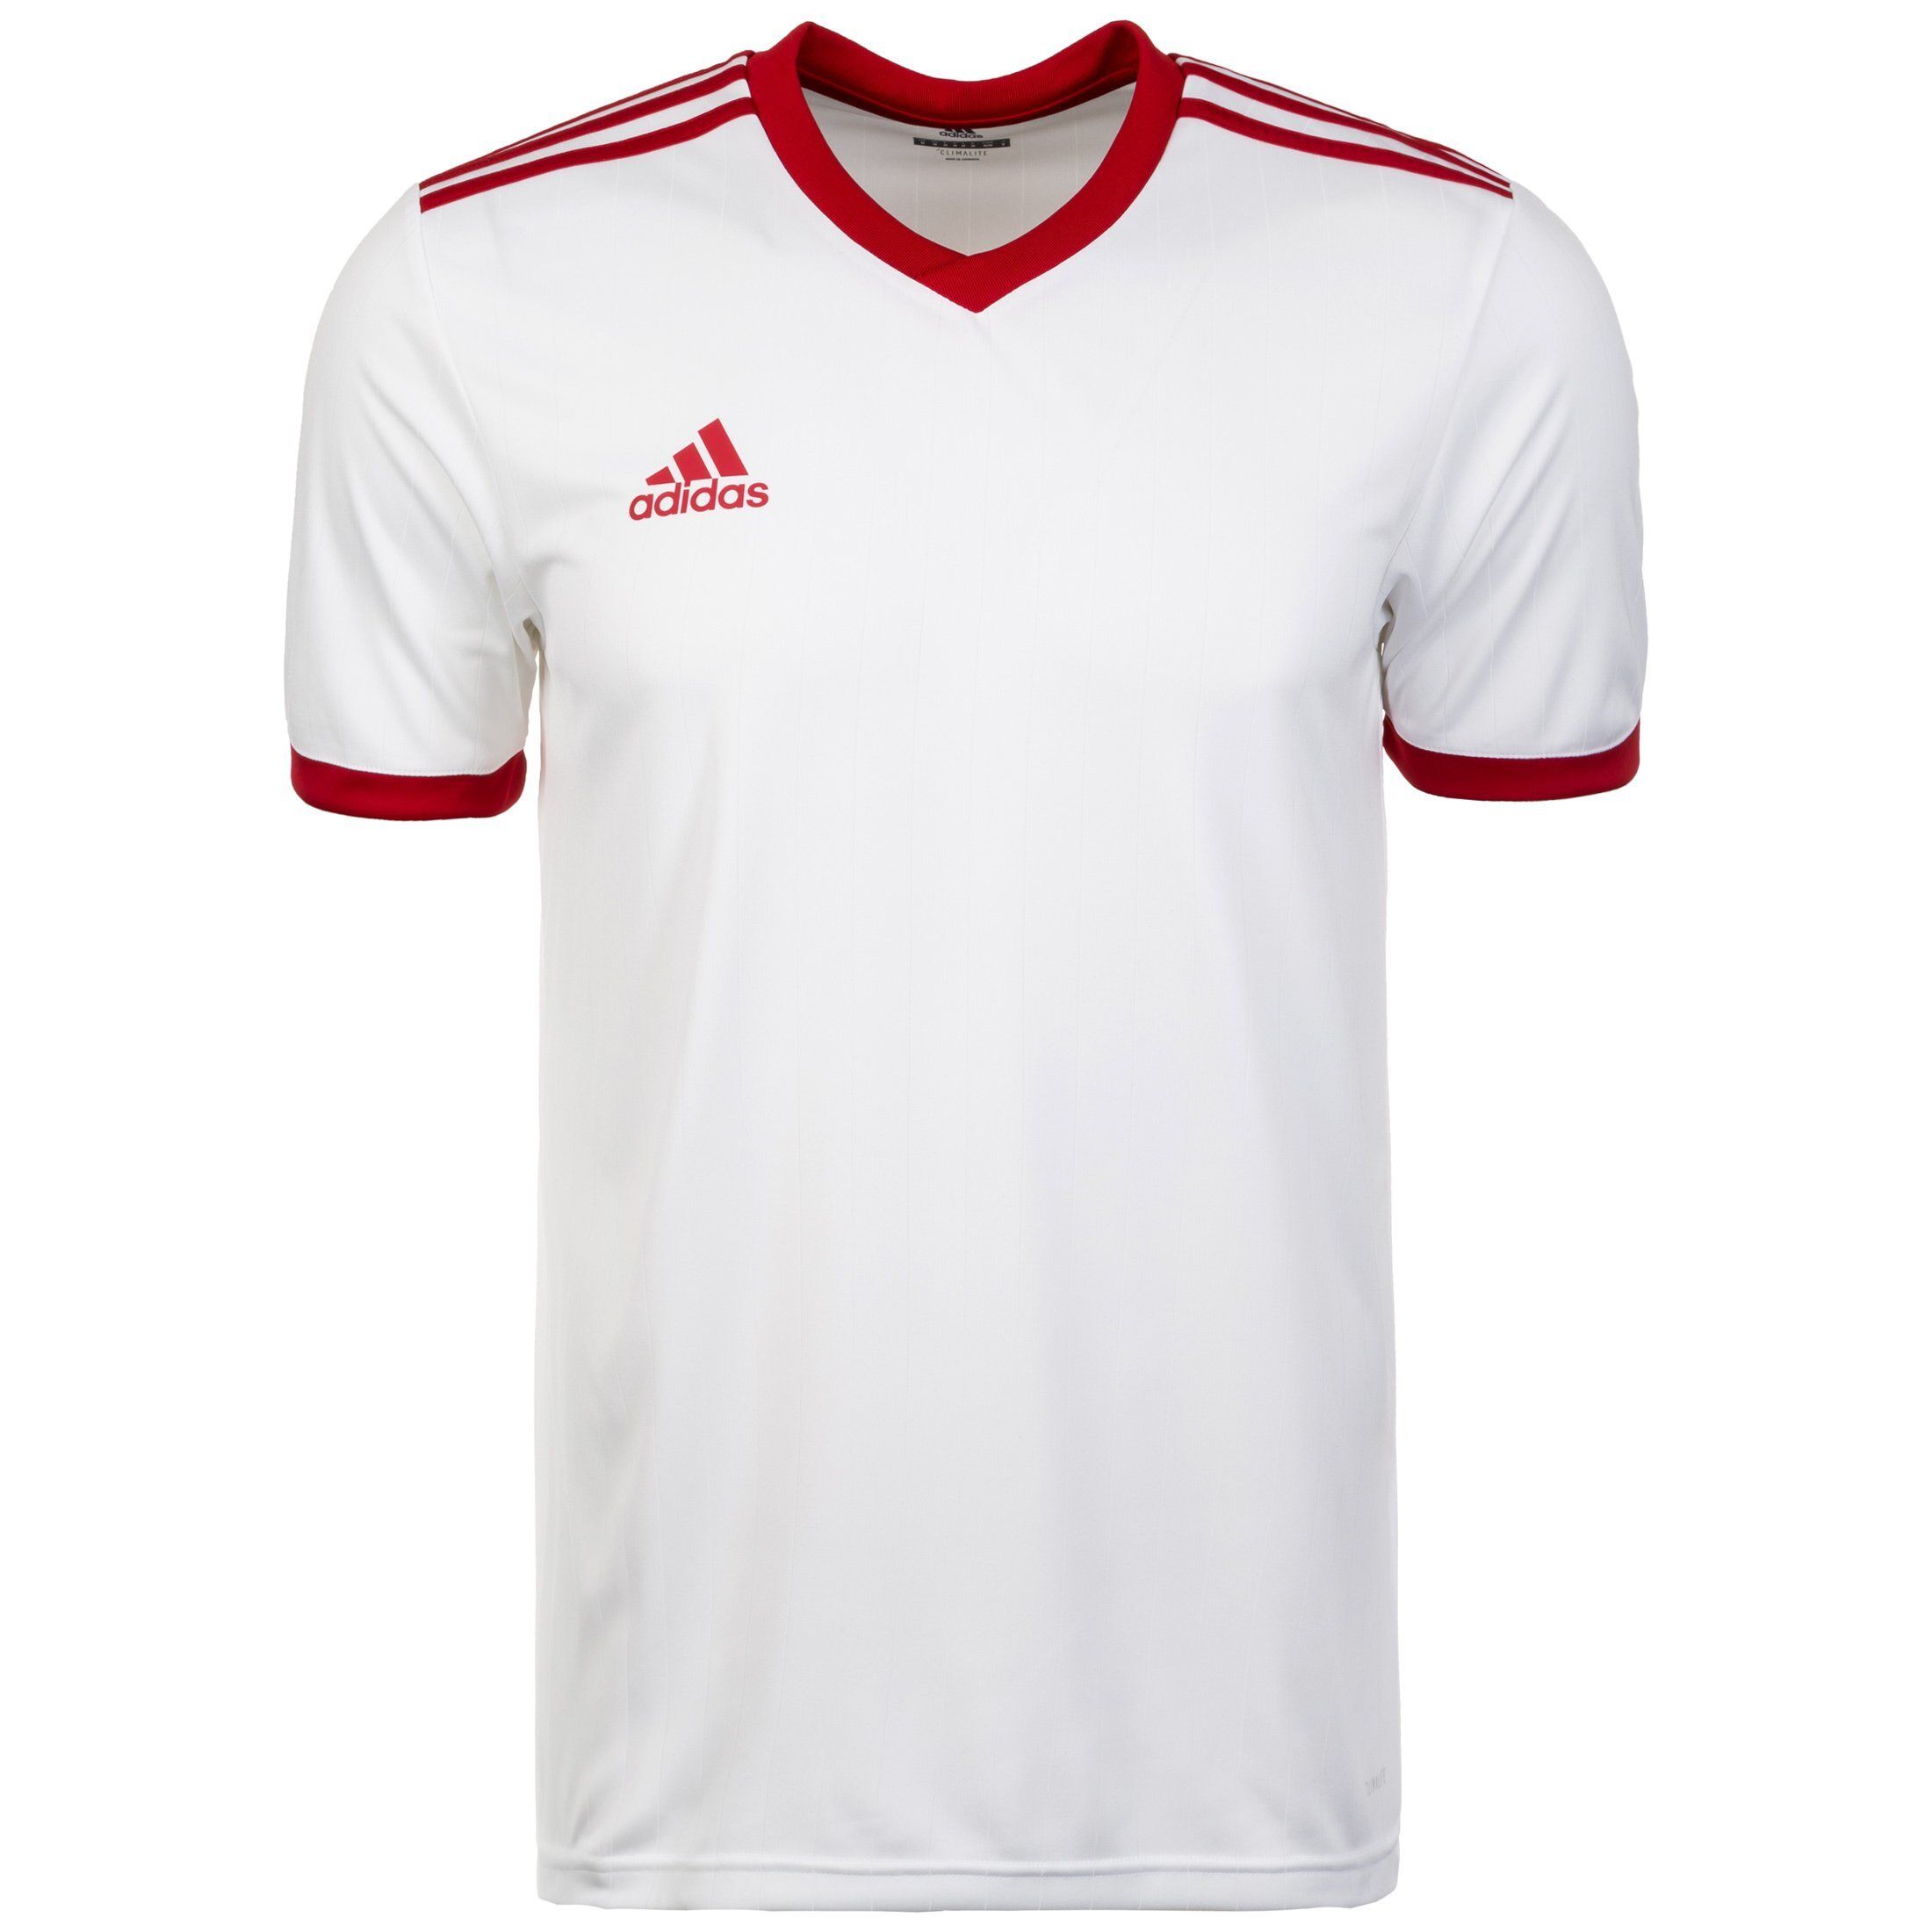 Adidas Performance Fußballtrikot »Tabela 18«, weiß-rot